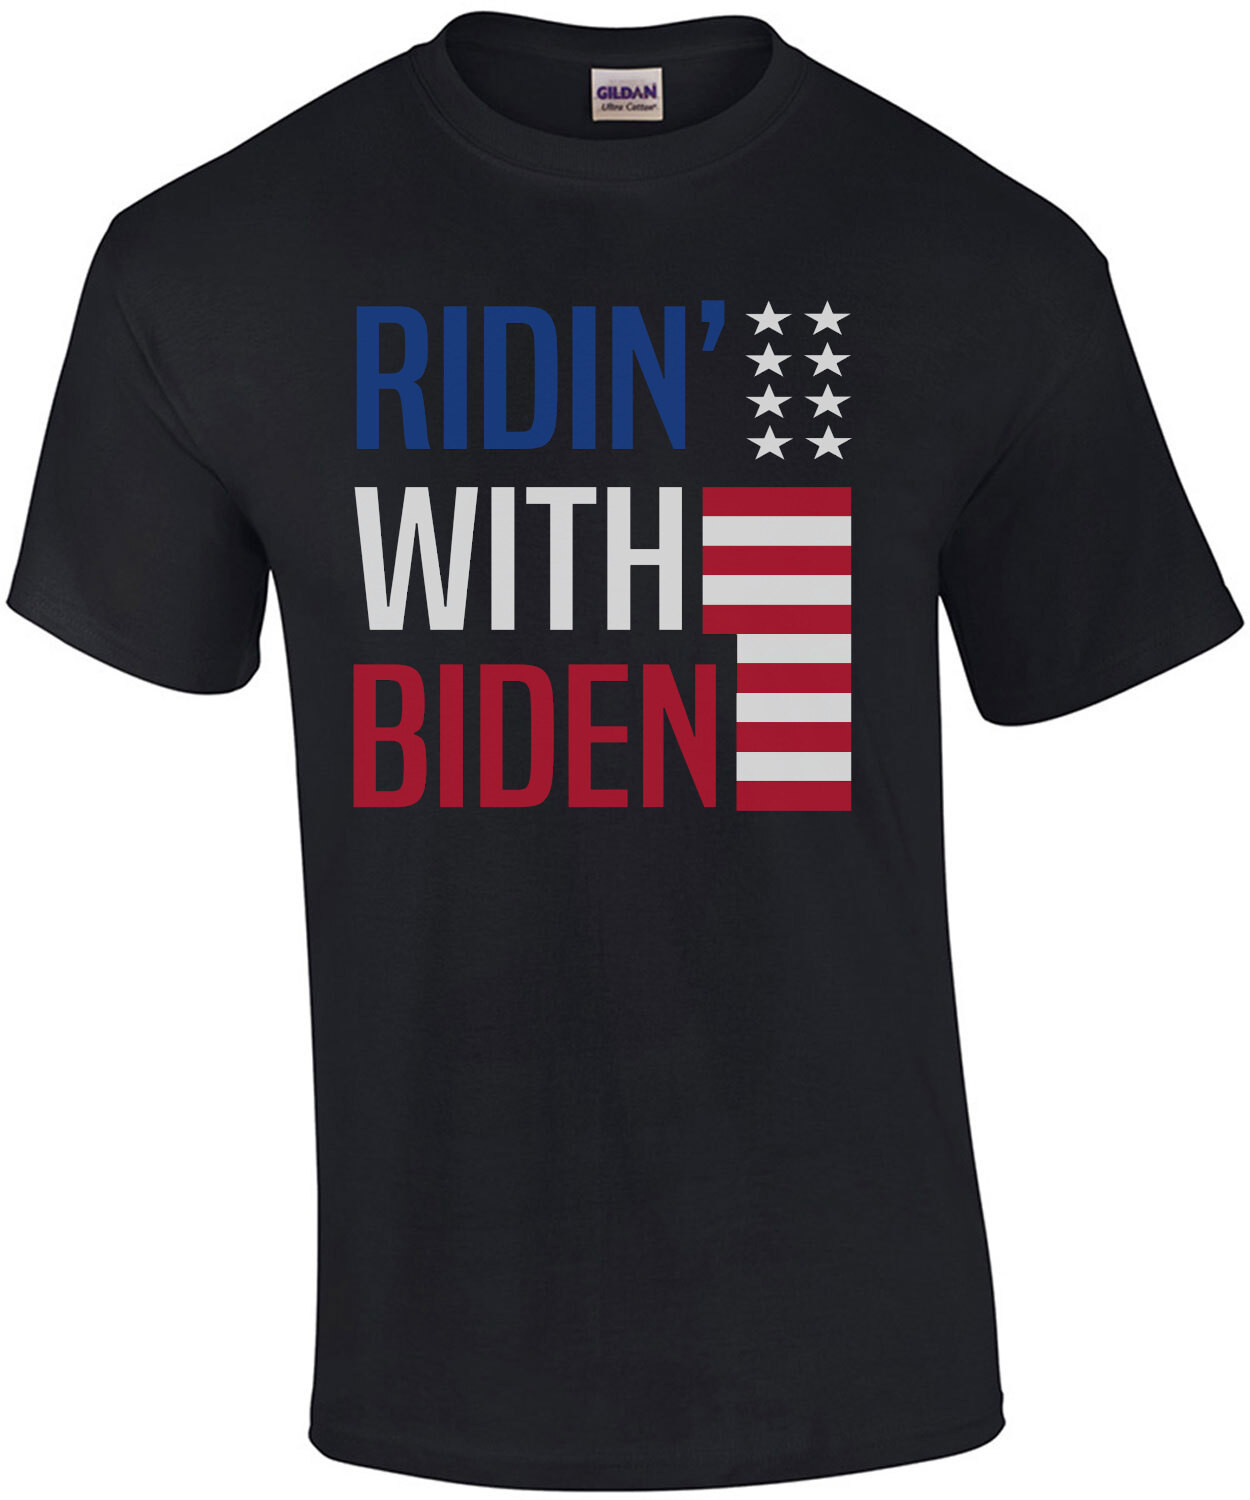 Ridin' with Biden - joe biden t-shirt